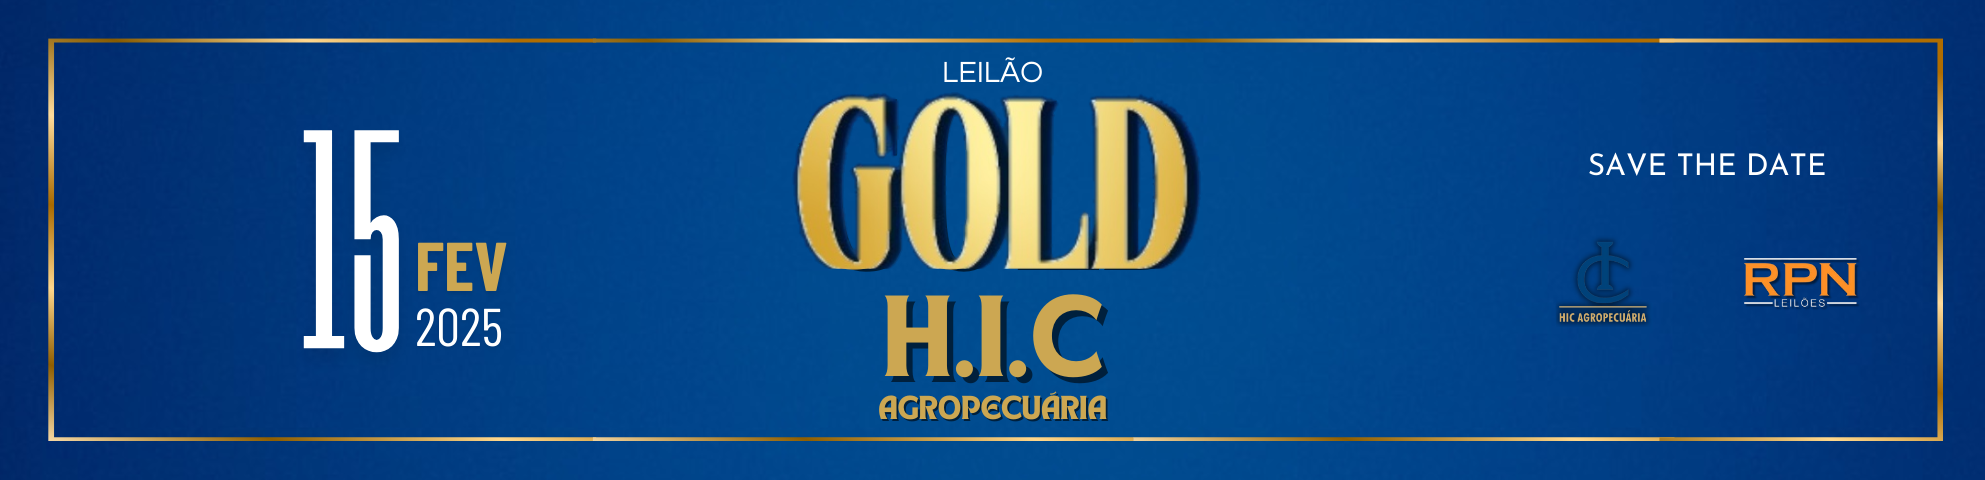 Slide LEILAO-GOLD-HIC-AGROPECUARIA